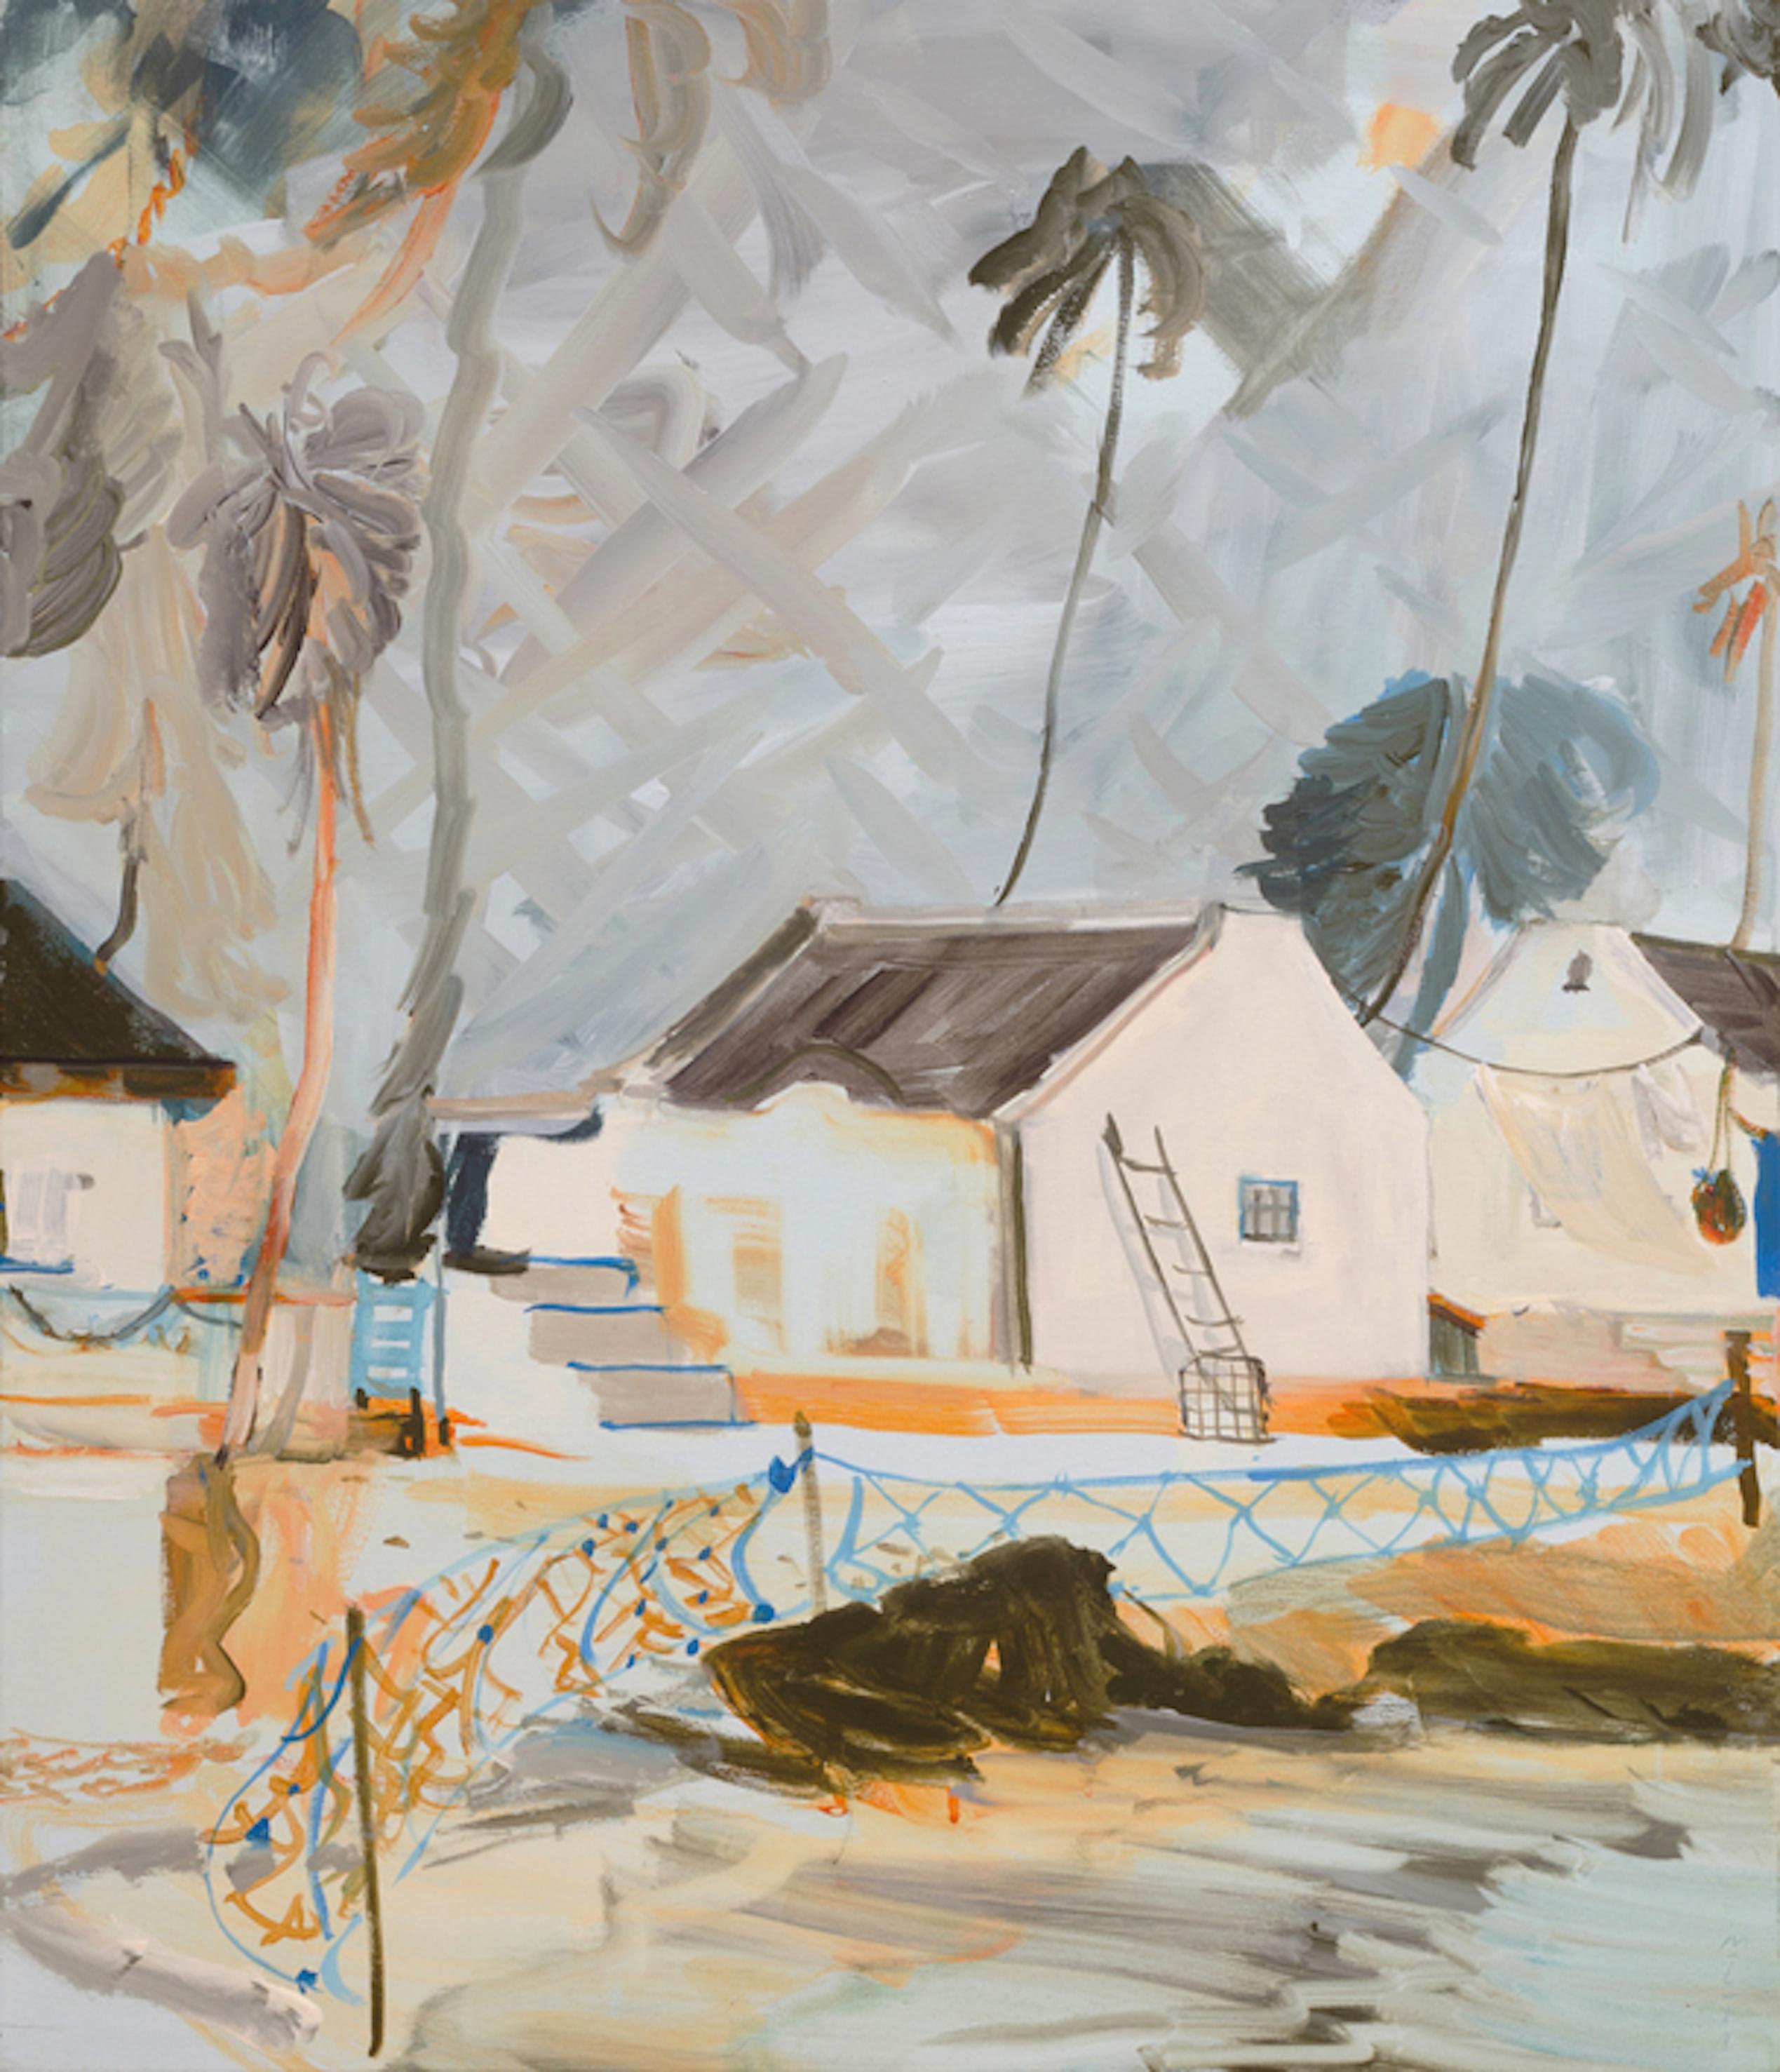  Michael Taylor  Landscape Painting - 'Island Diamond', Contemporary landscape acrylic painting on canvas, 2019 